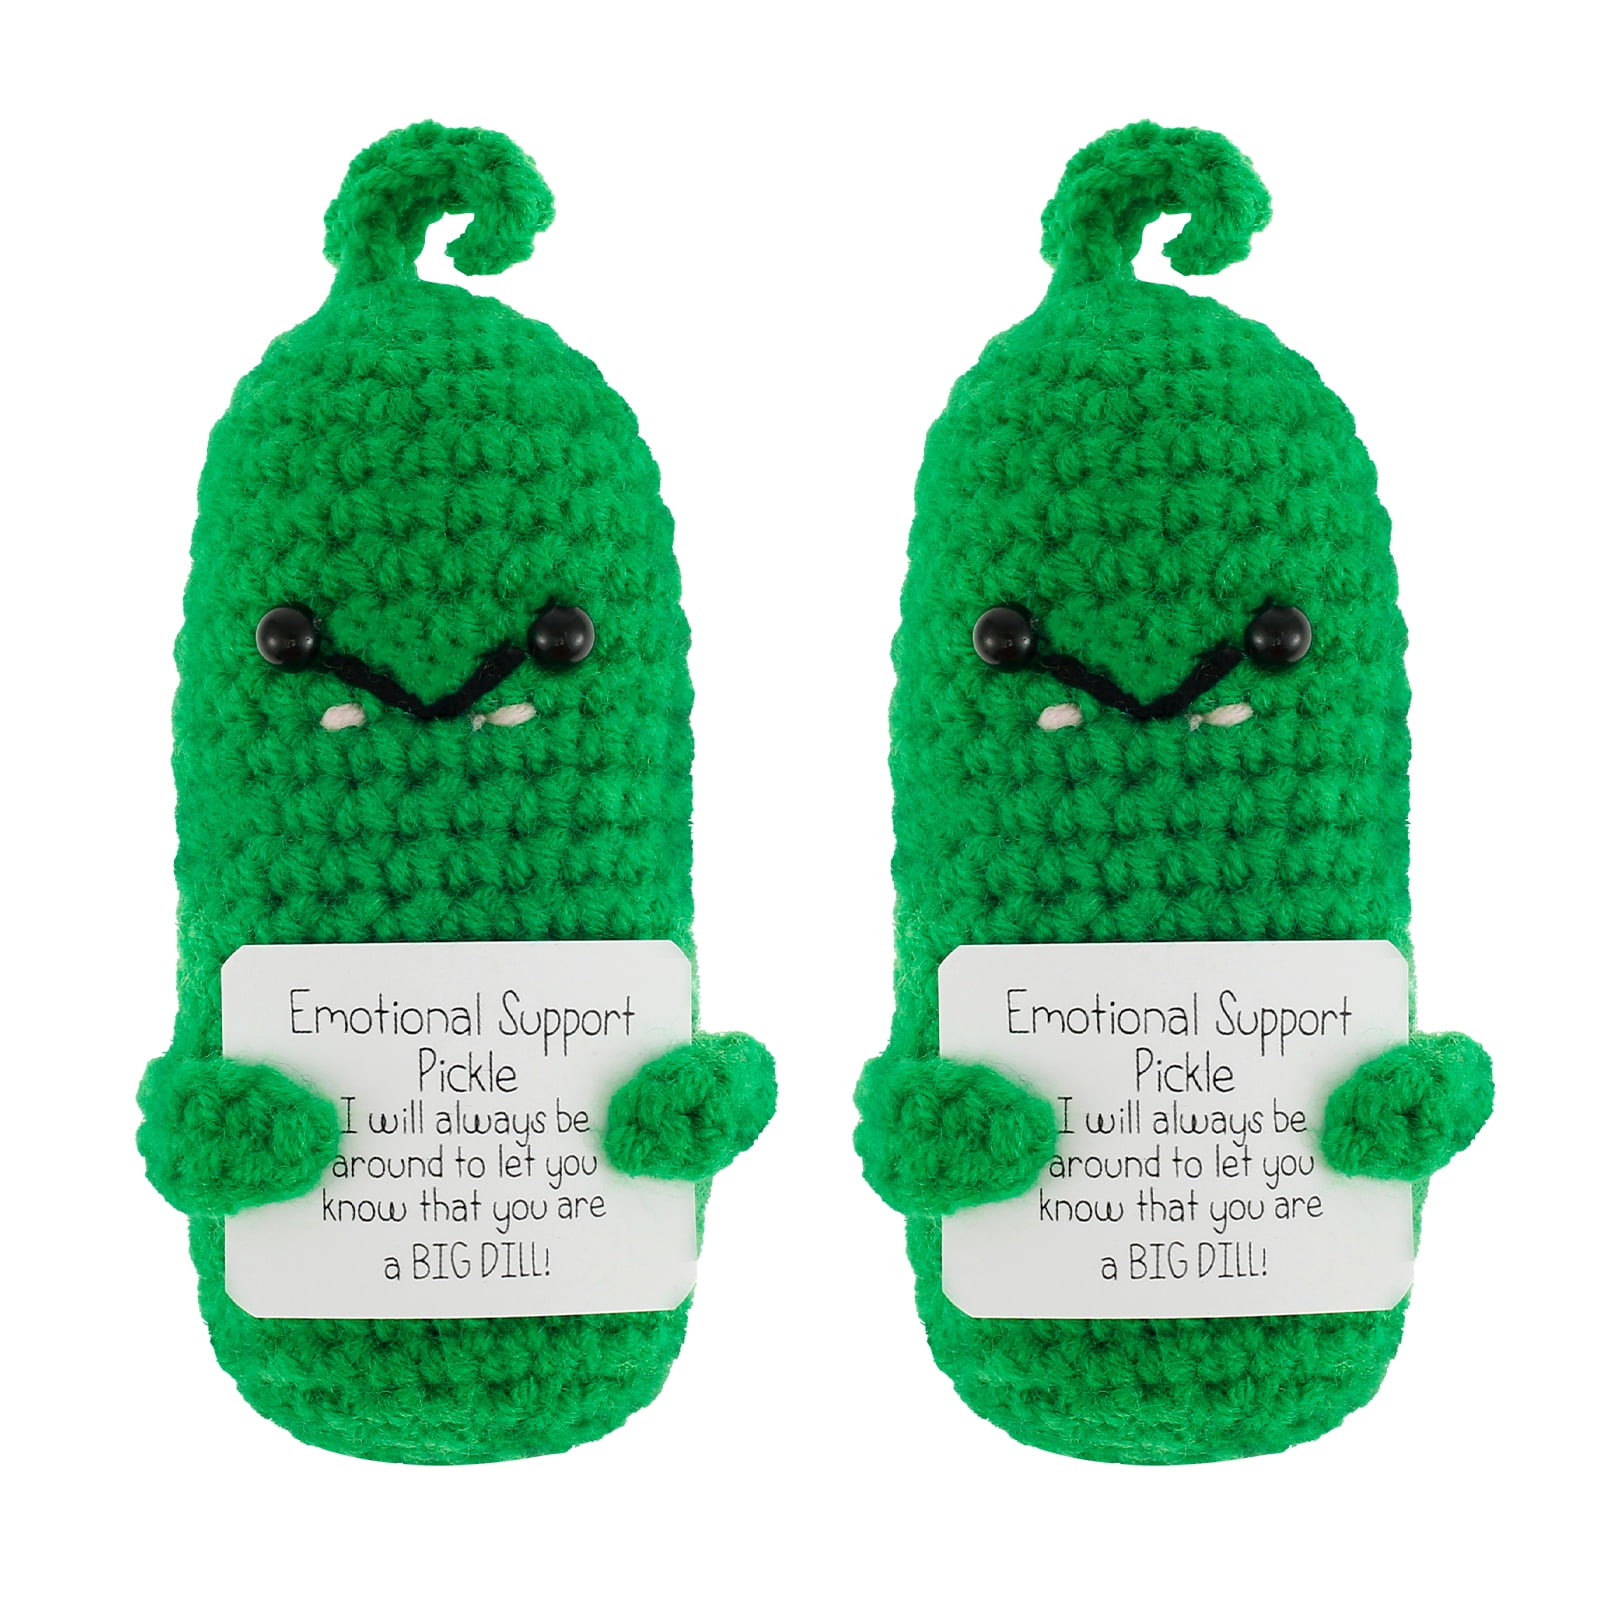 Emotional support pickle : r/GeekyCrochet